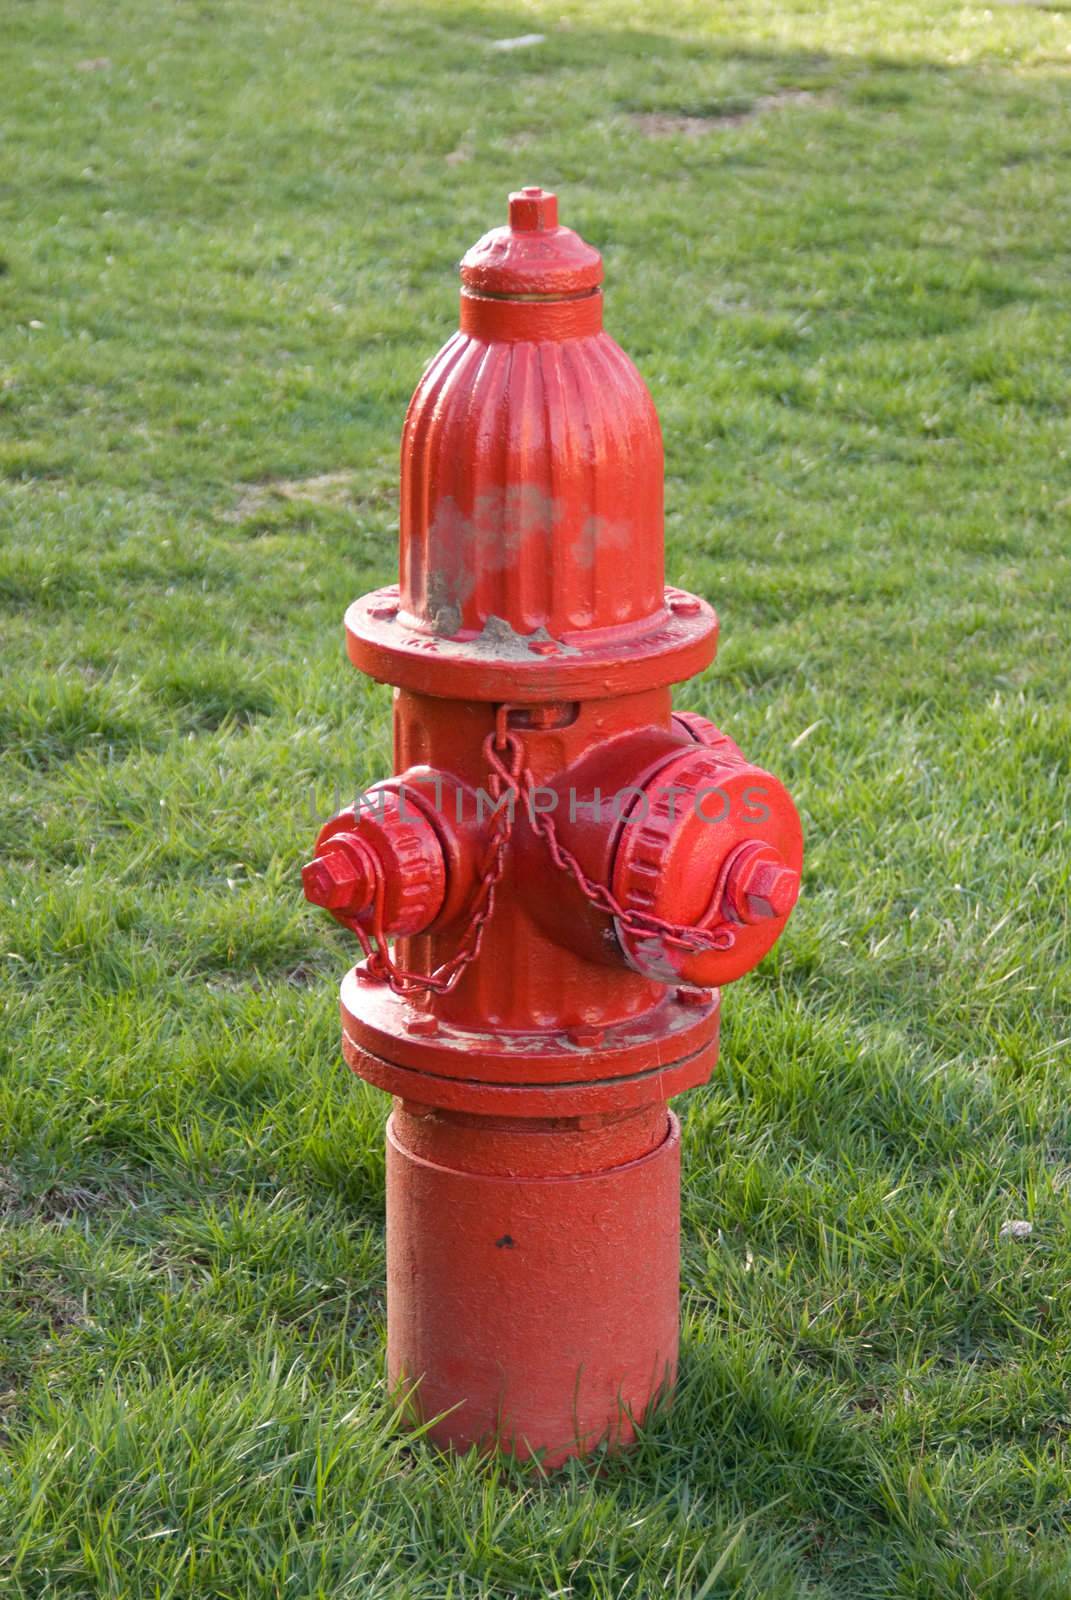 A beautiful fire hydrant on a lawn